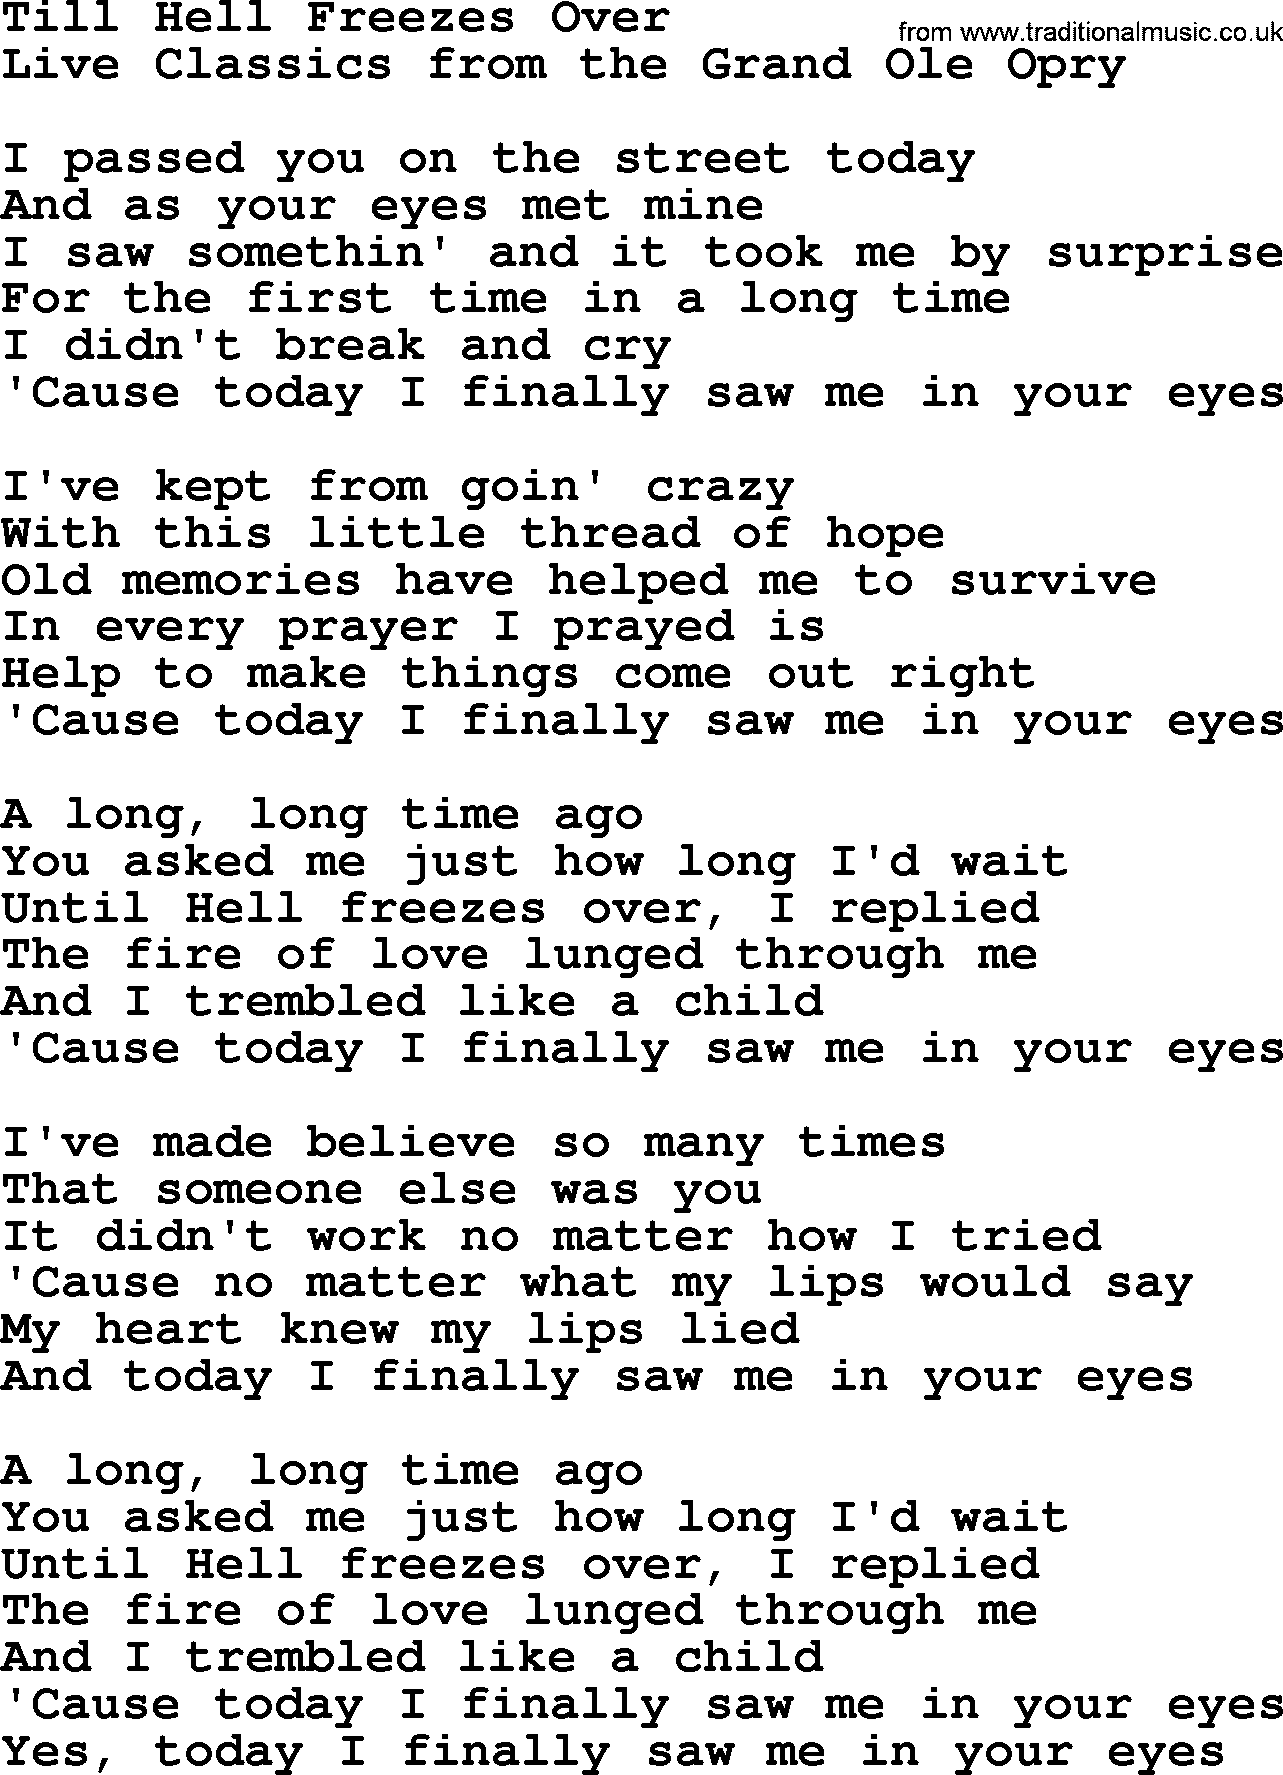 Marty Robbins song: Till Hell Freezes Over, lyrics